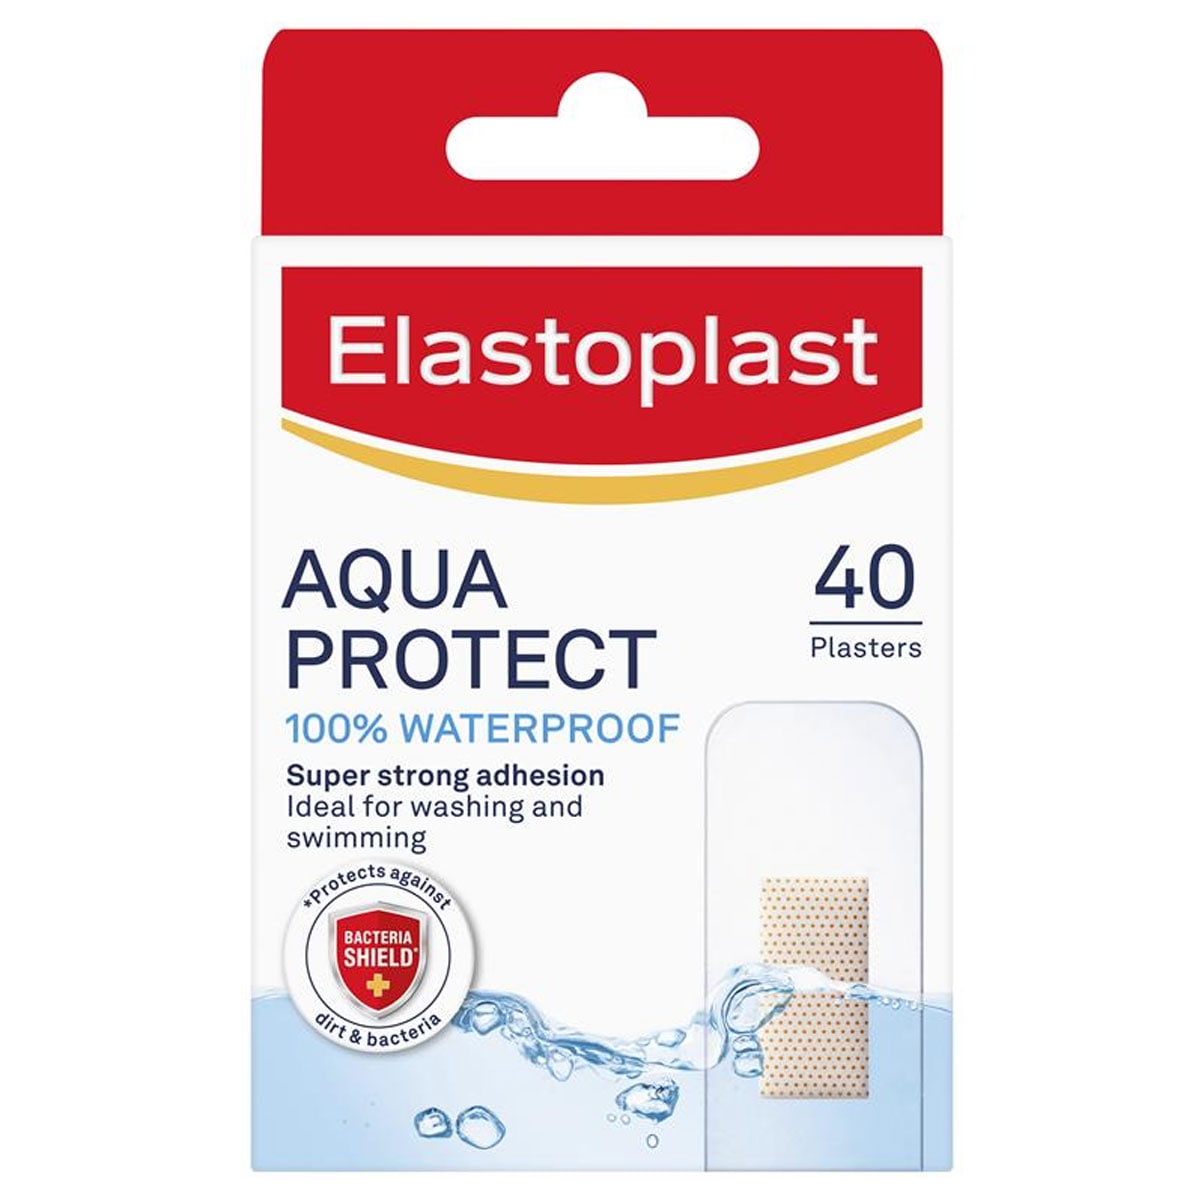 Elastoplast Aqua Protect Waterproof Plasters 40 Strips